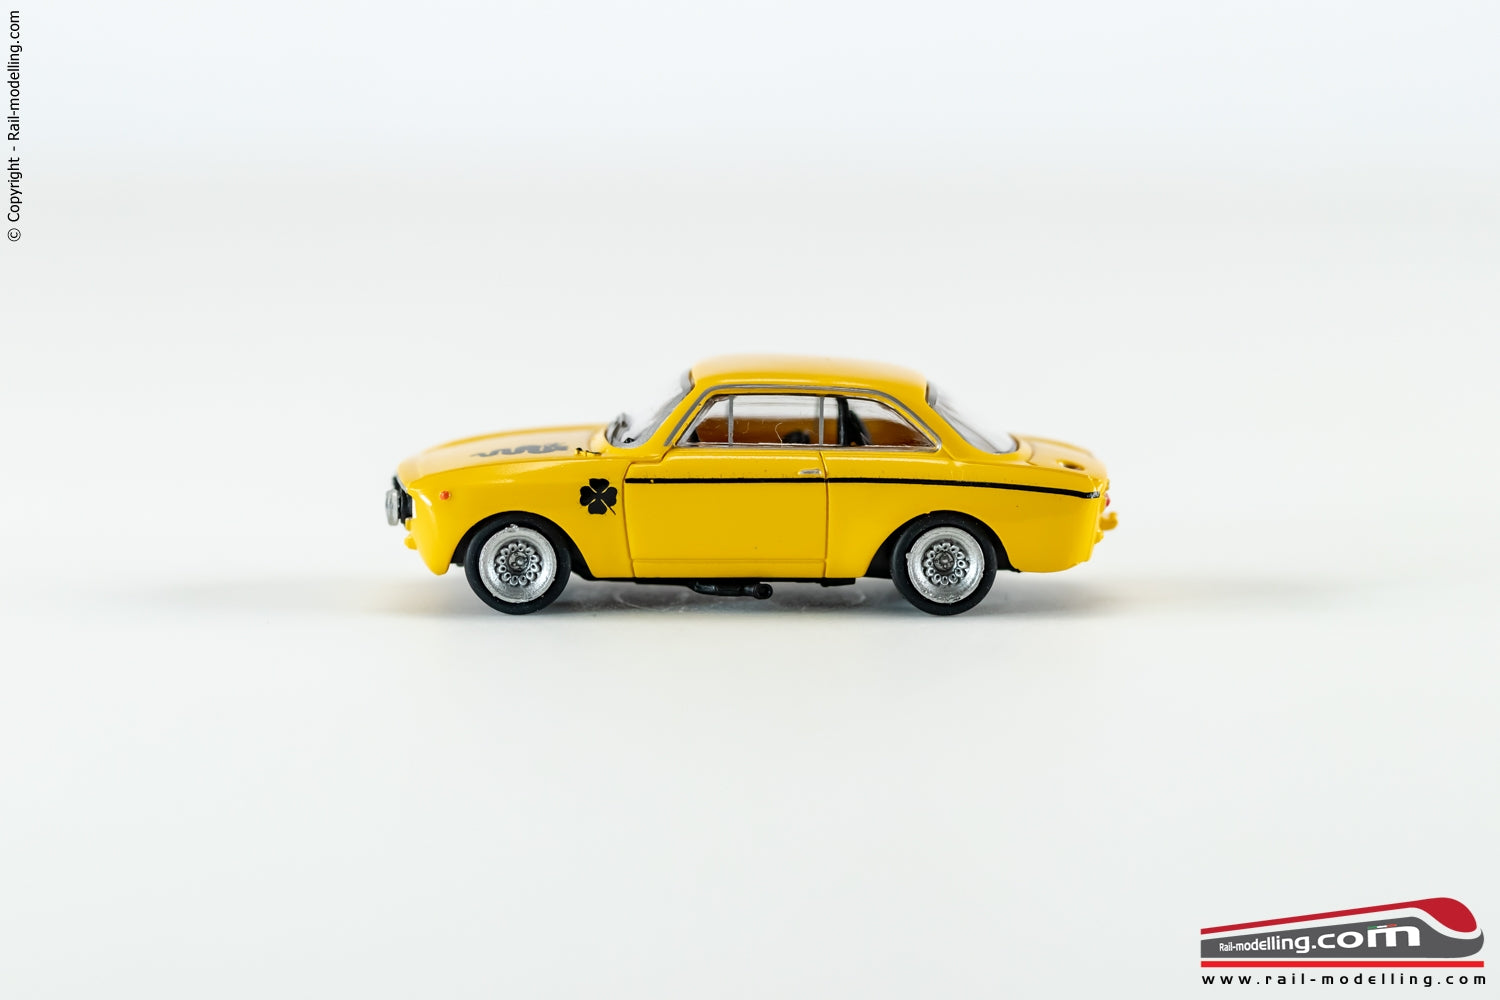 BREKINA 29701 - H0 187 - Auto modellino Alfa Romeo Giulia GTA 1300 giallo